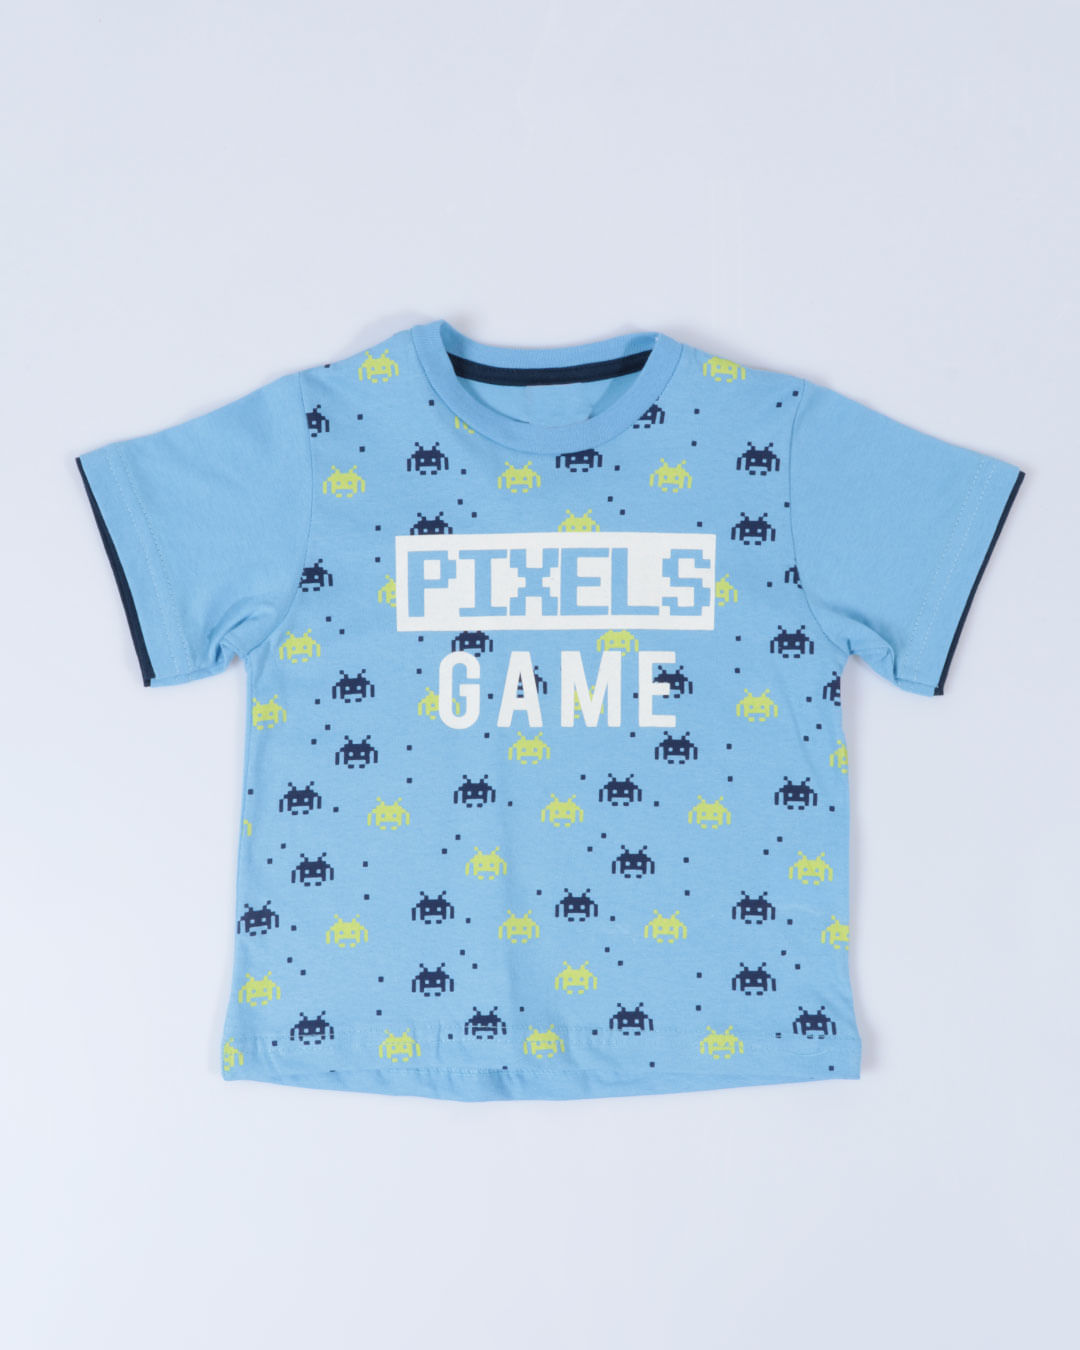 Camiseta-Bebe-Estampa-Pixels-Games-Azul-Claro-